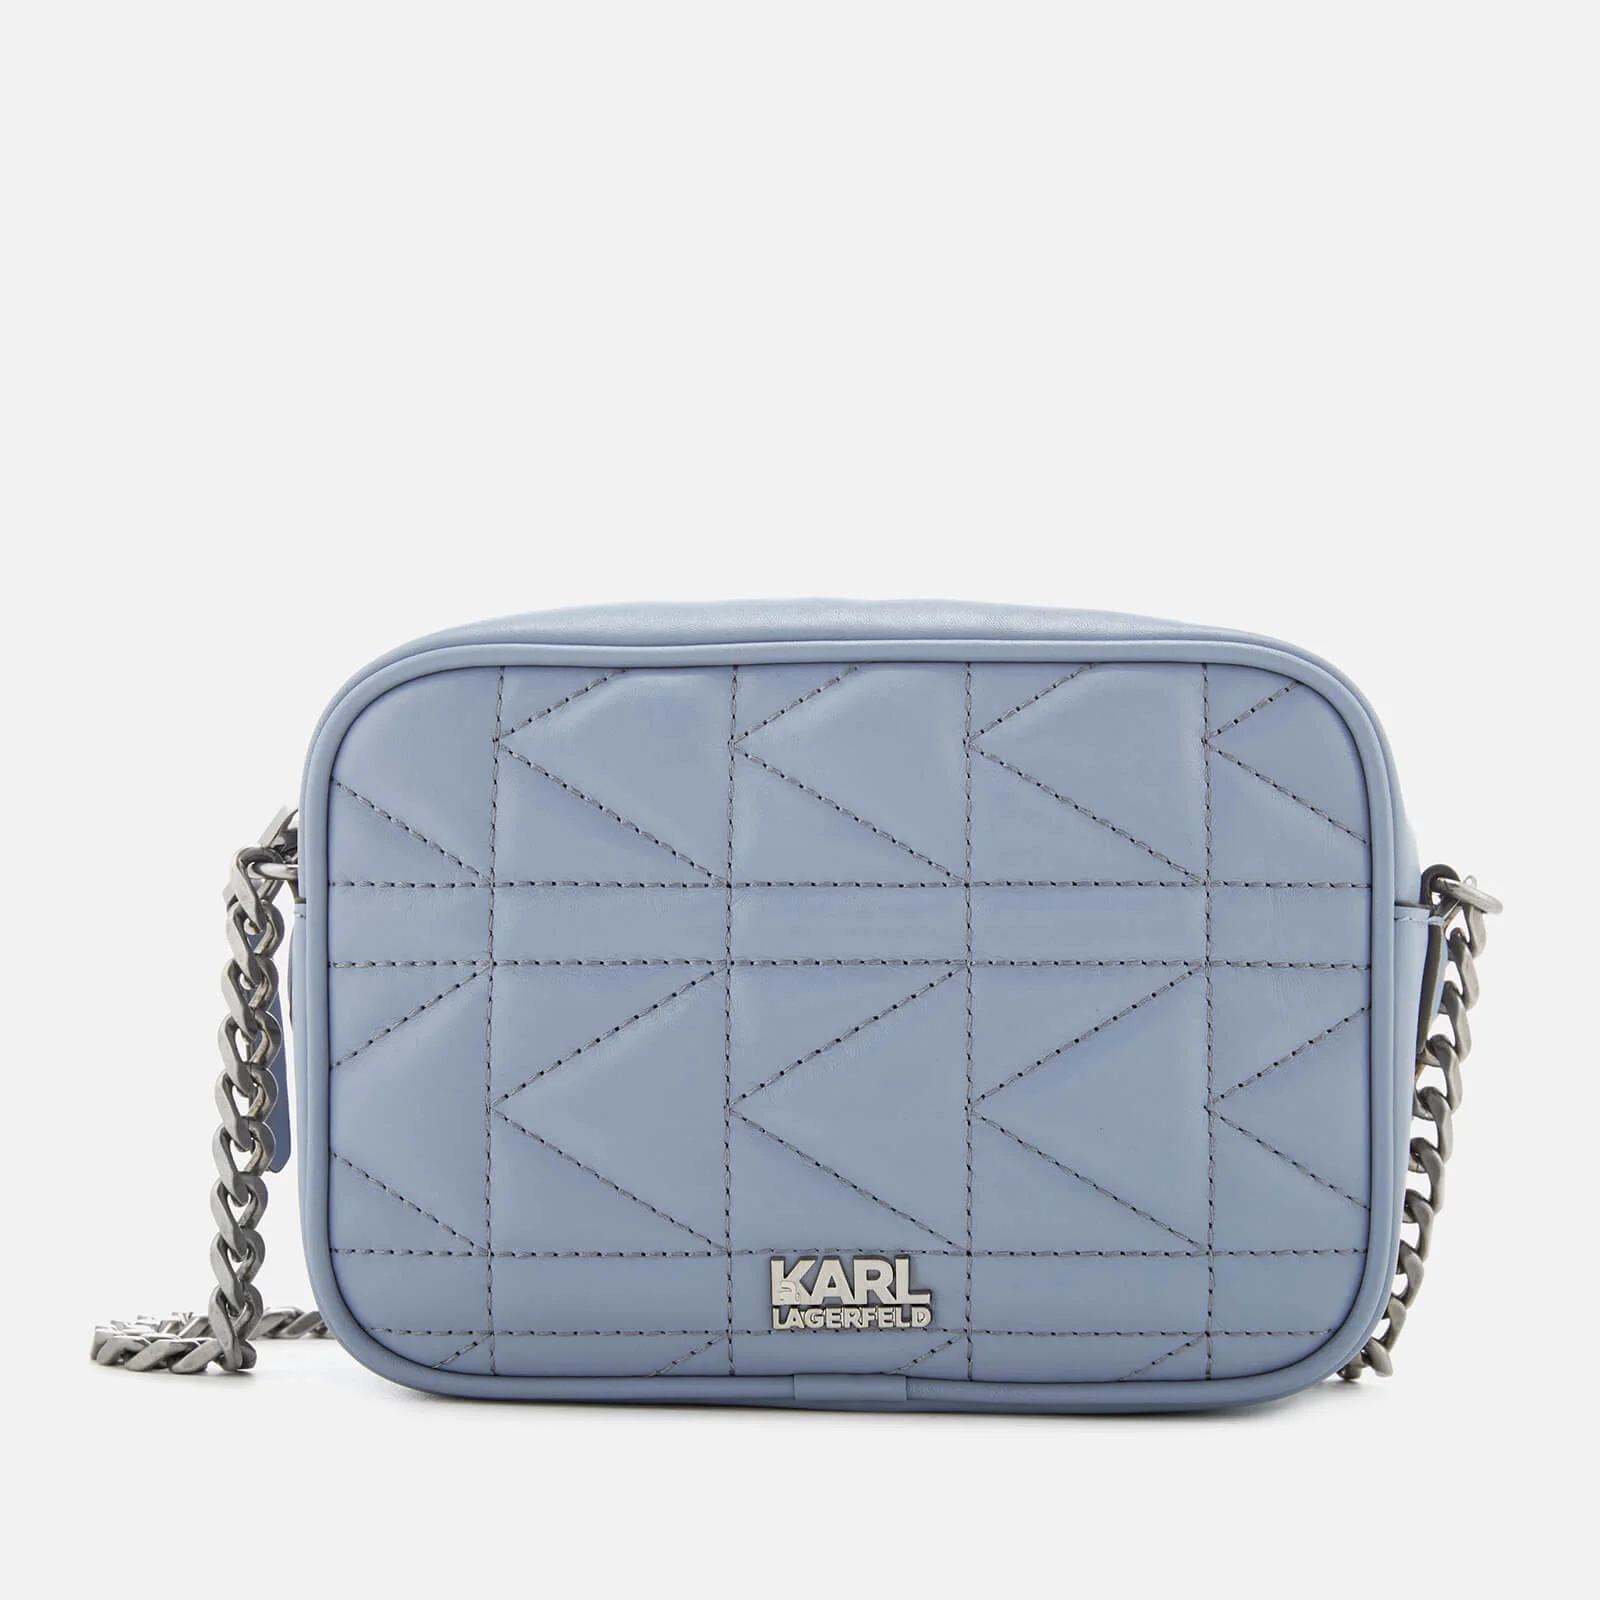 Karl Lagerfeld Women's K/Kuilted Cross Body Bag - Mistic Blue Image 1